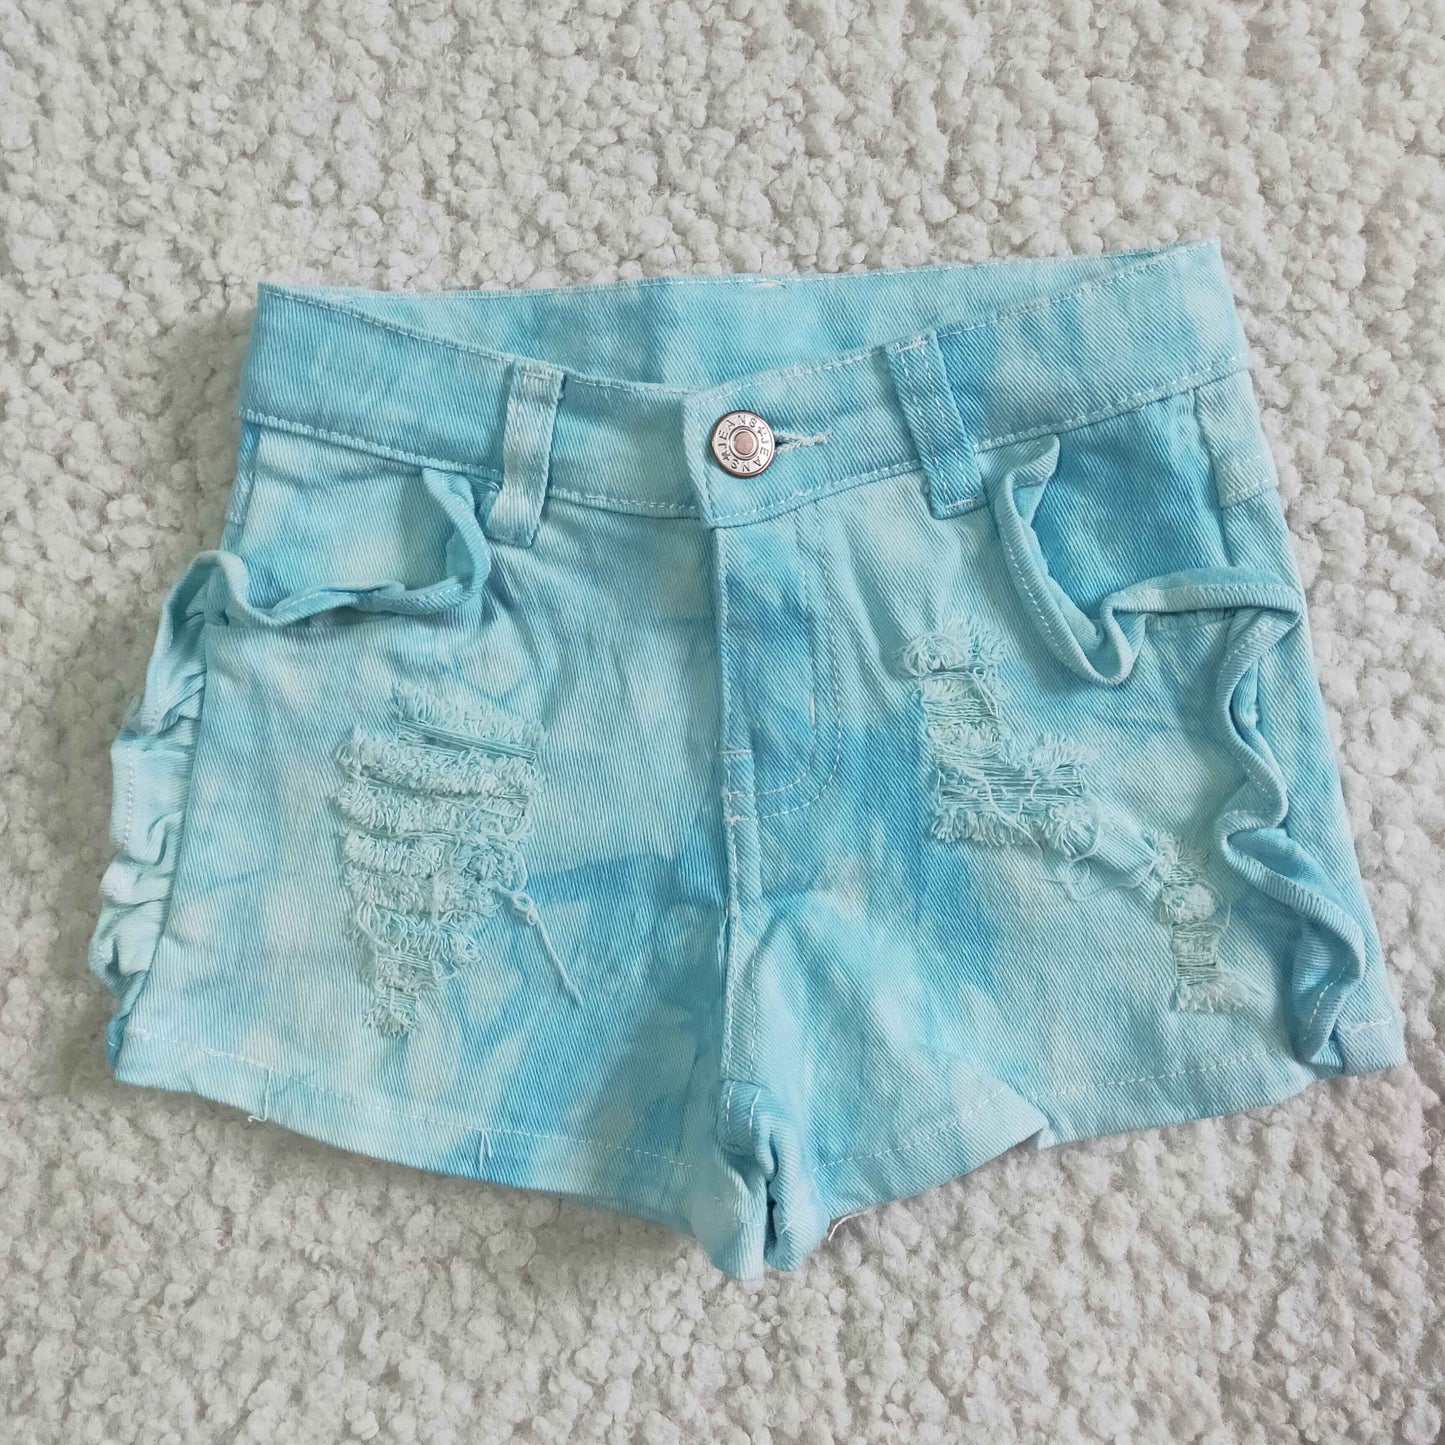 Light blue elastic waistband jeans baby girls denim shorts